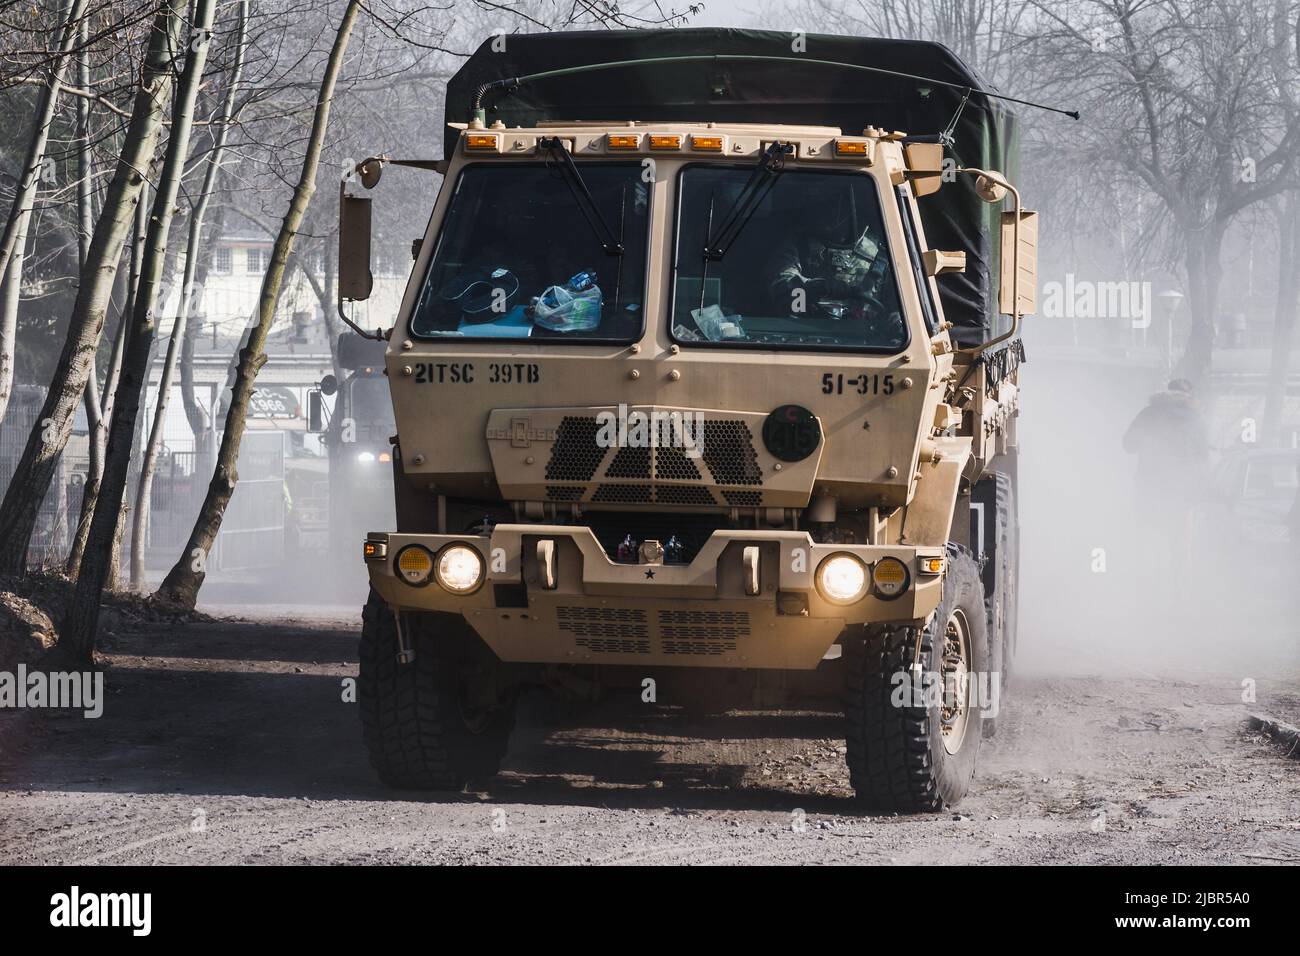 Lublin, Poland - March 25, 2015: United States Army Oshkosh Medium Tactical Vehicle passing city streets Stock Photo